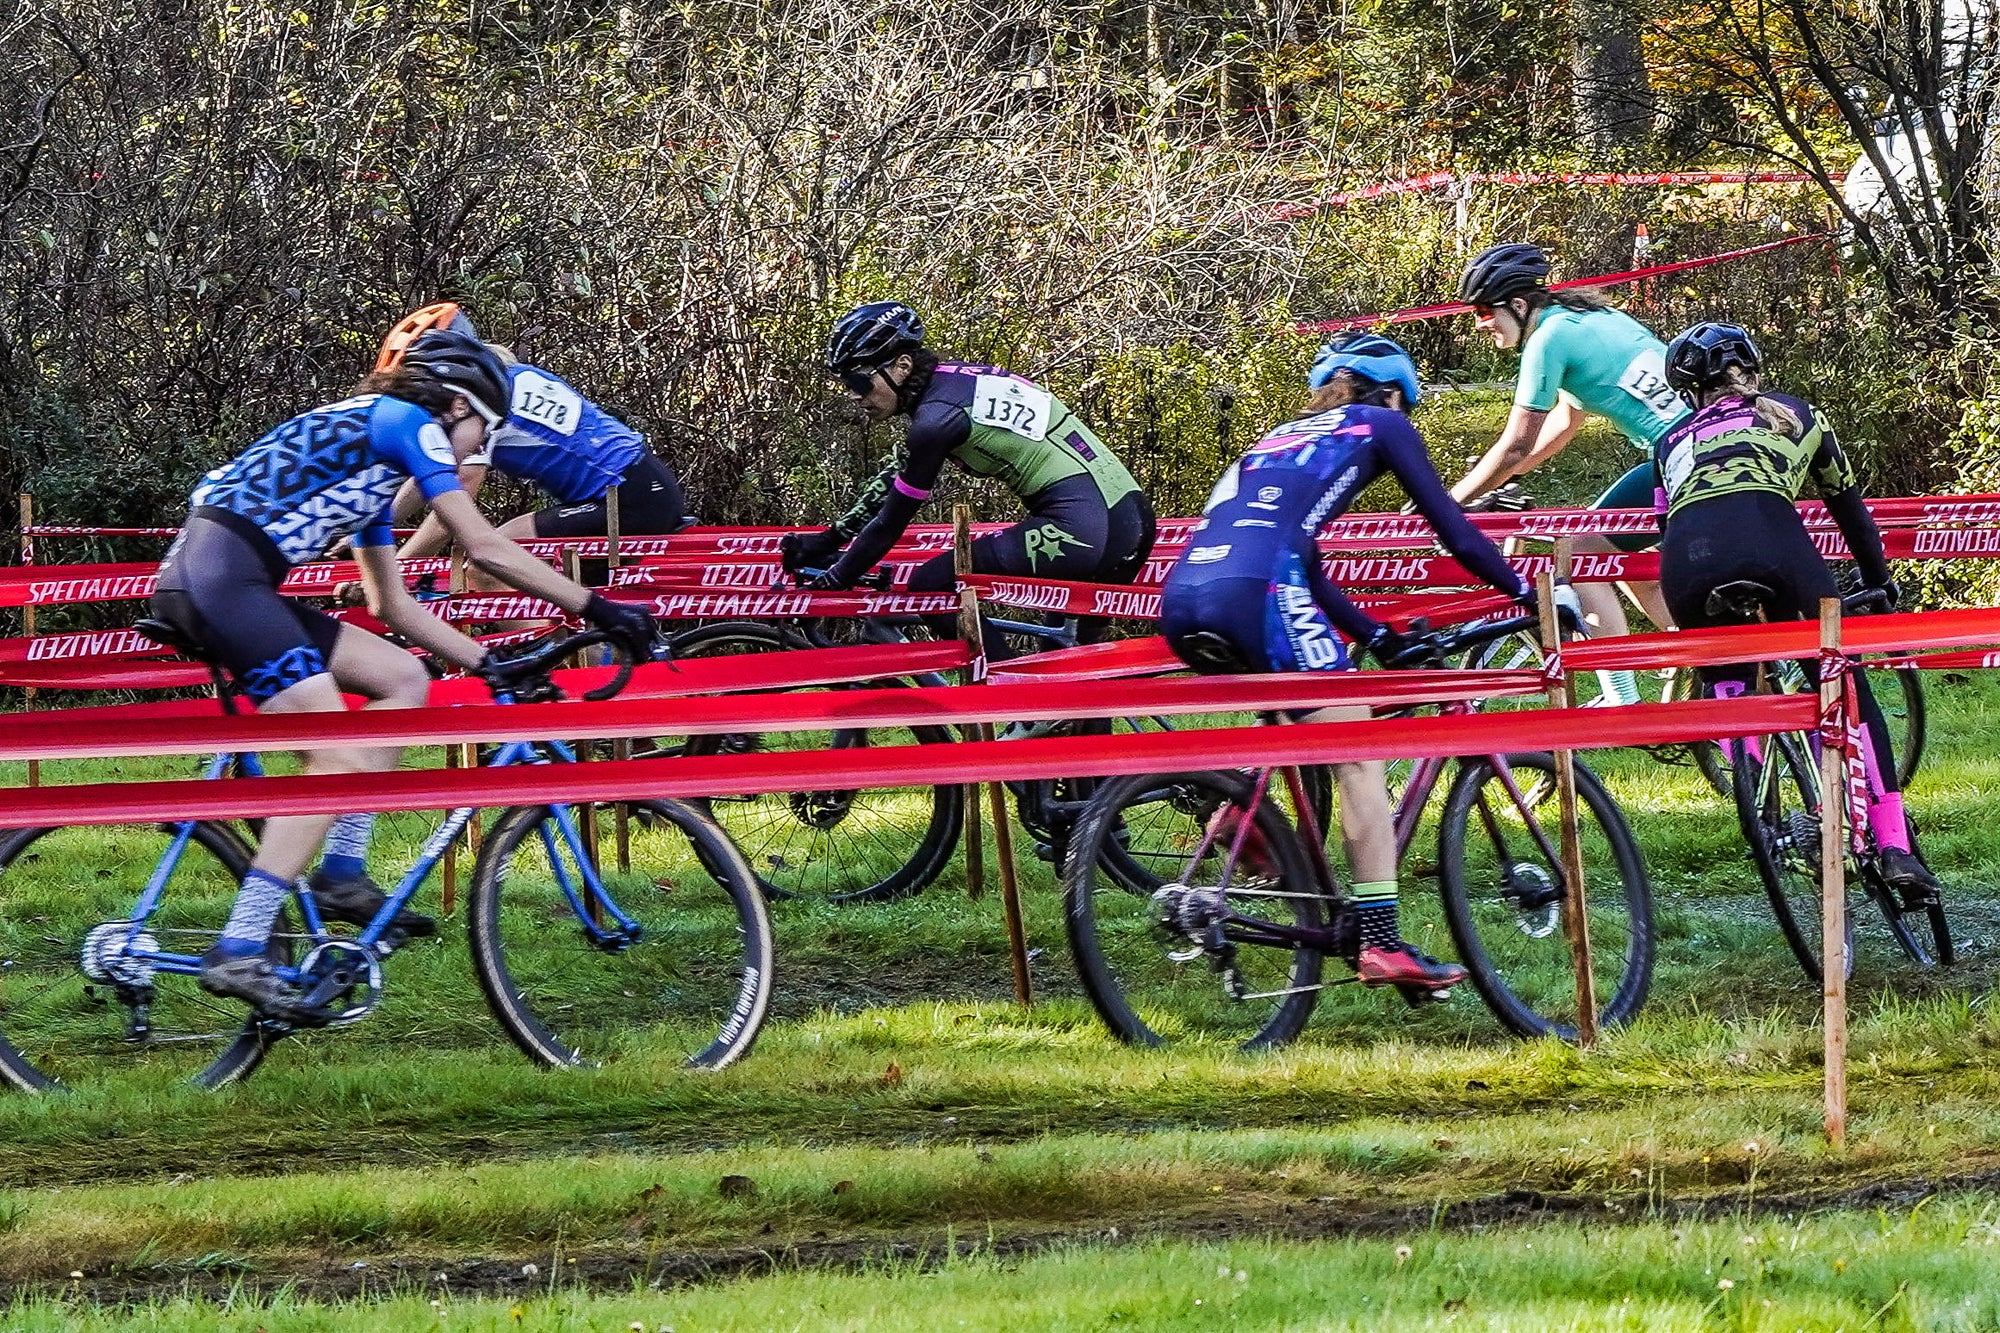 Bike riders racing cyclocross on a grassy field